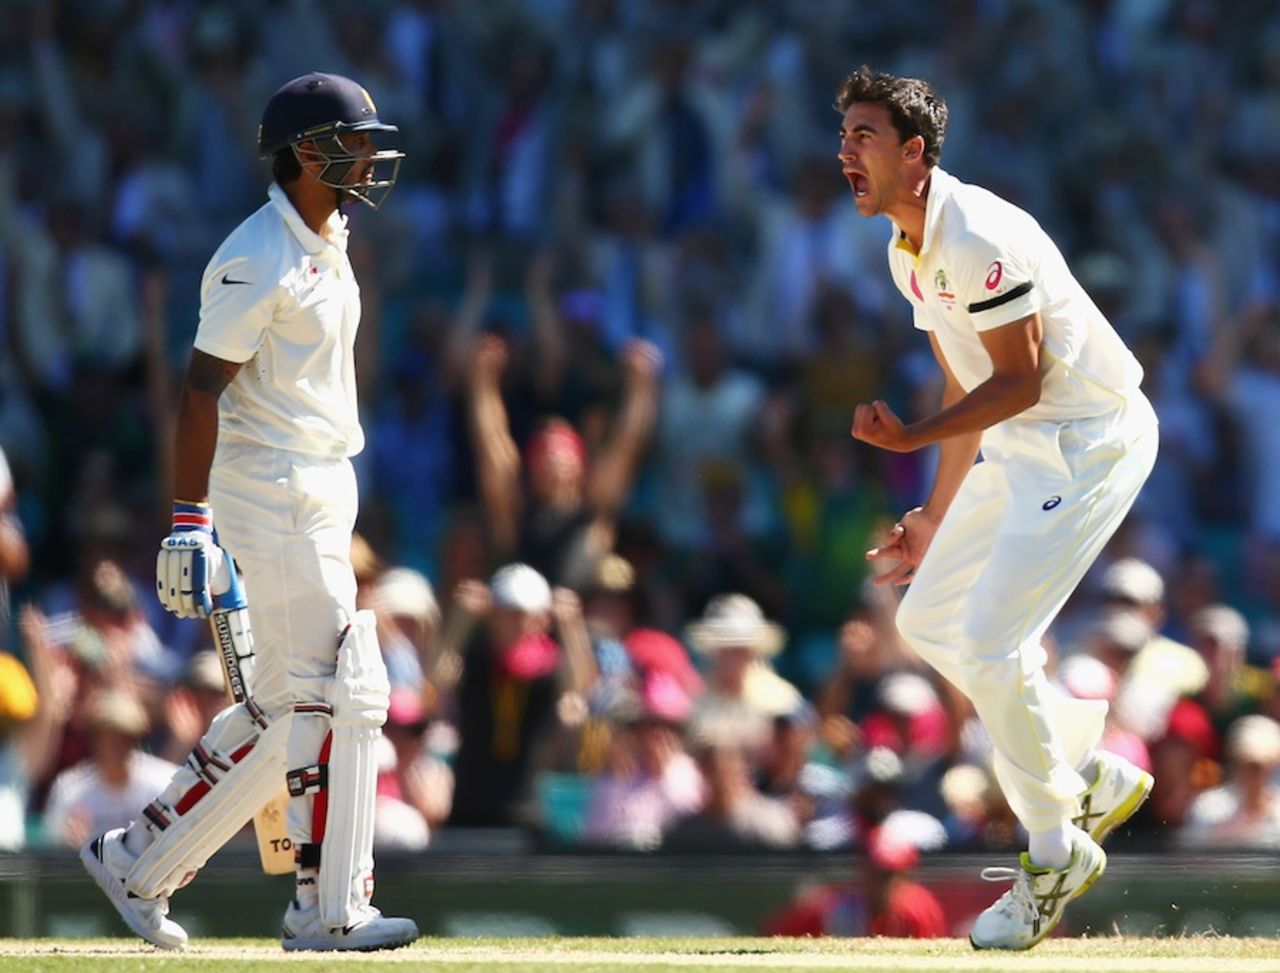 Mitchell Starc gives M Vijay a send-off, Australia v India, 4th Test, Sydney, 2nd day, January 7, 2015